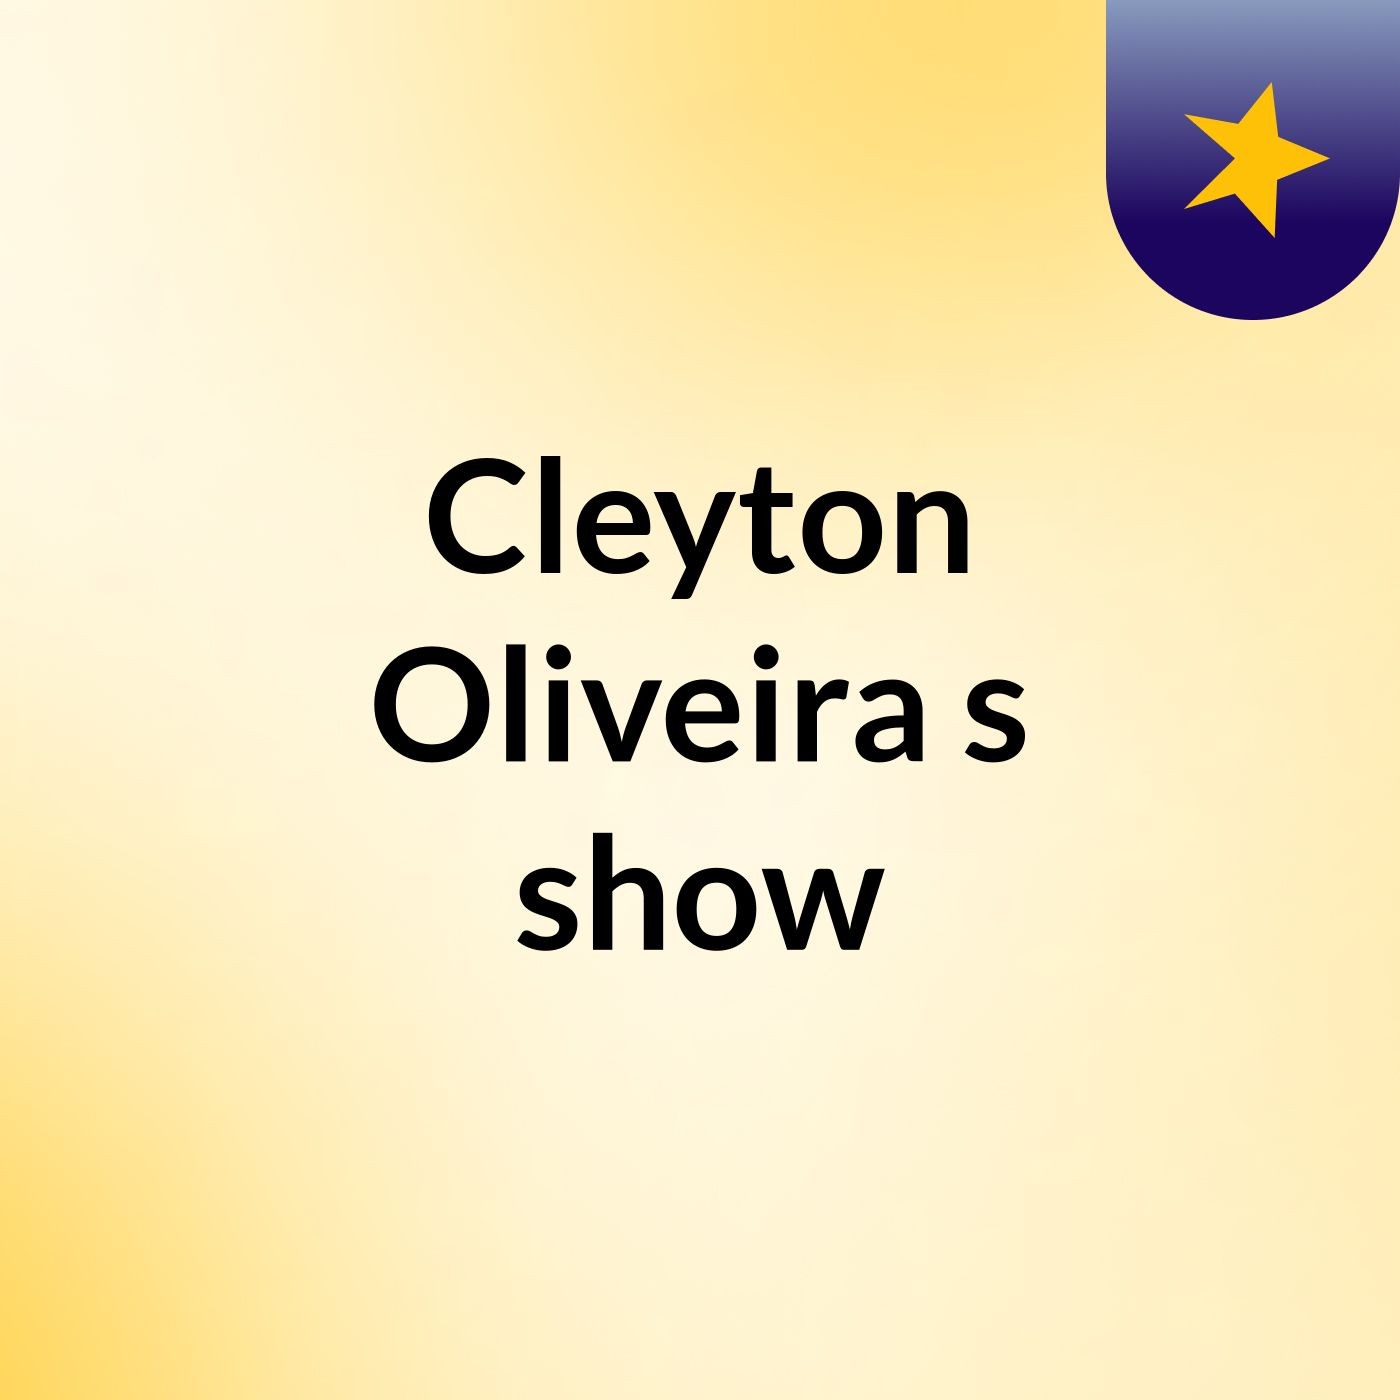 Cleyton Oliveira's show